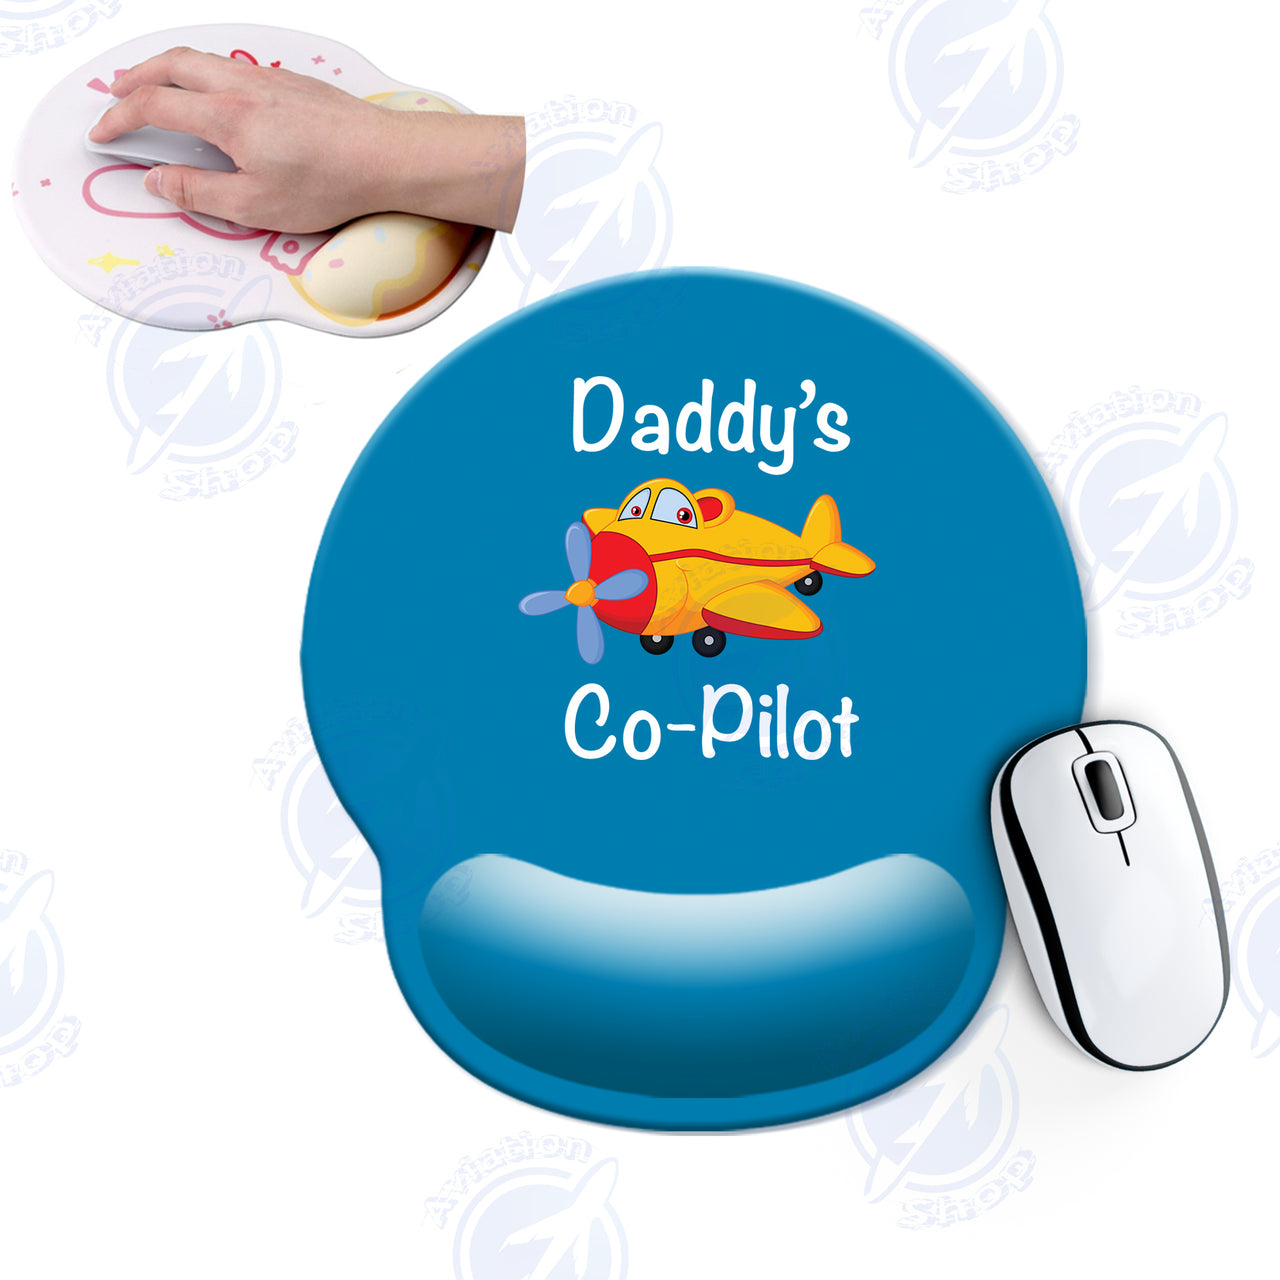 Daddy's CoPilot (Propeller) Designed Ergonomic Mouse Pads